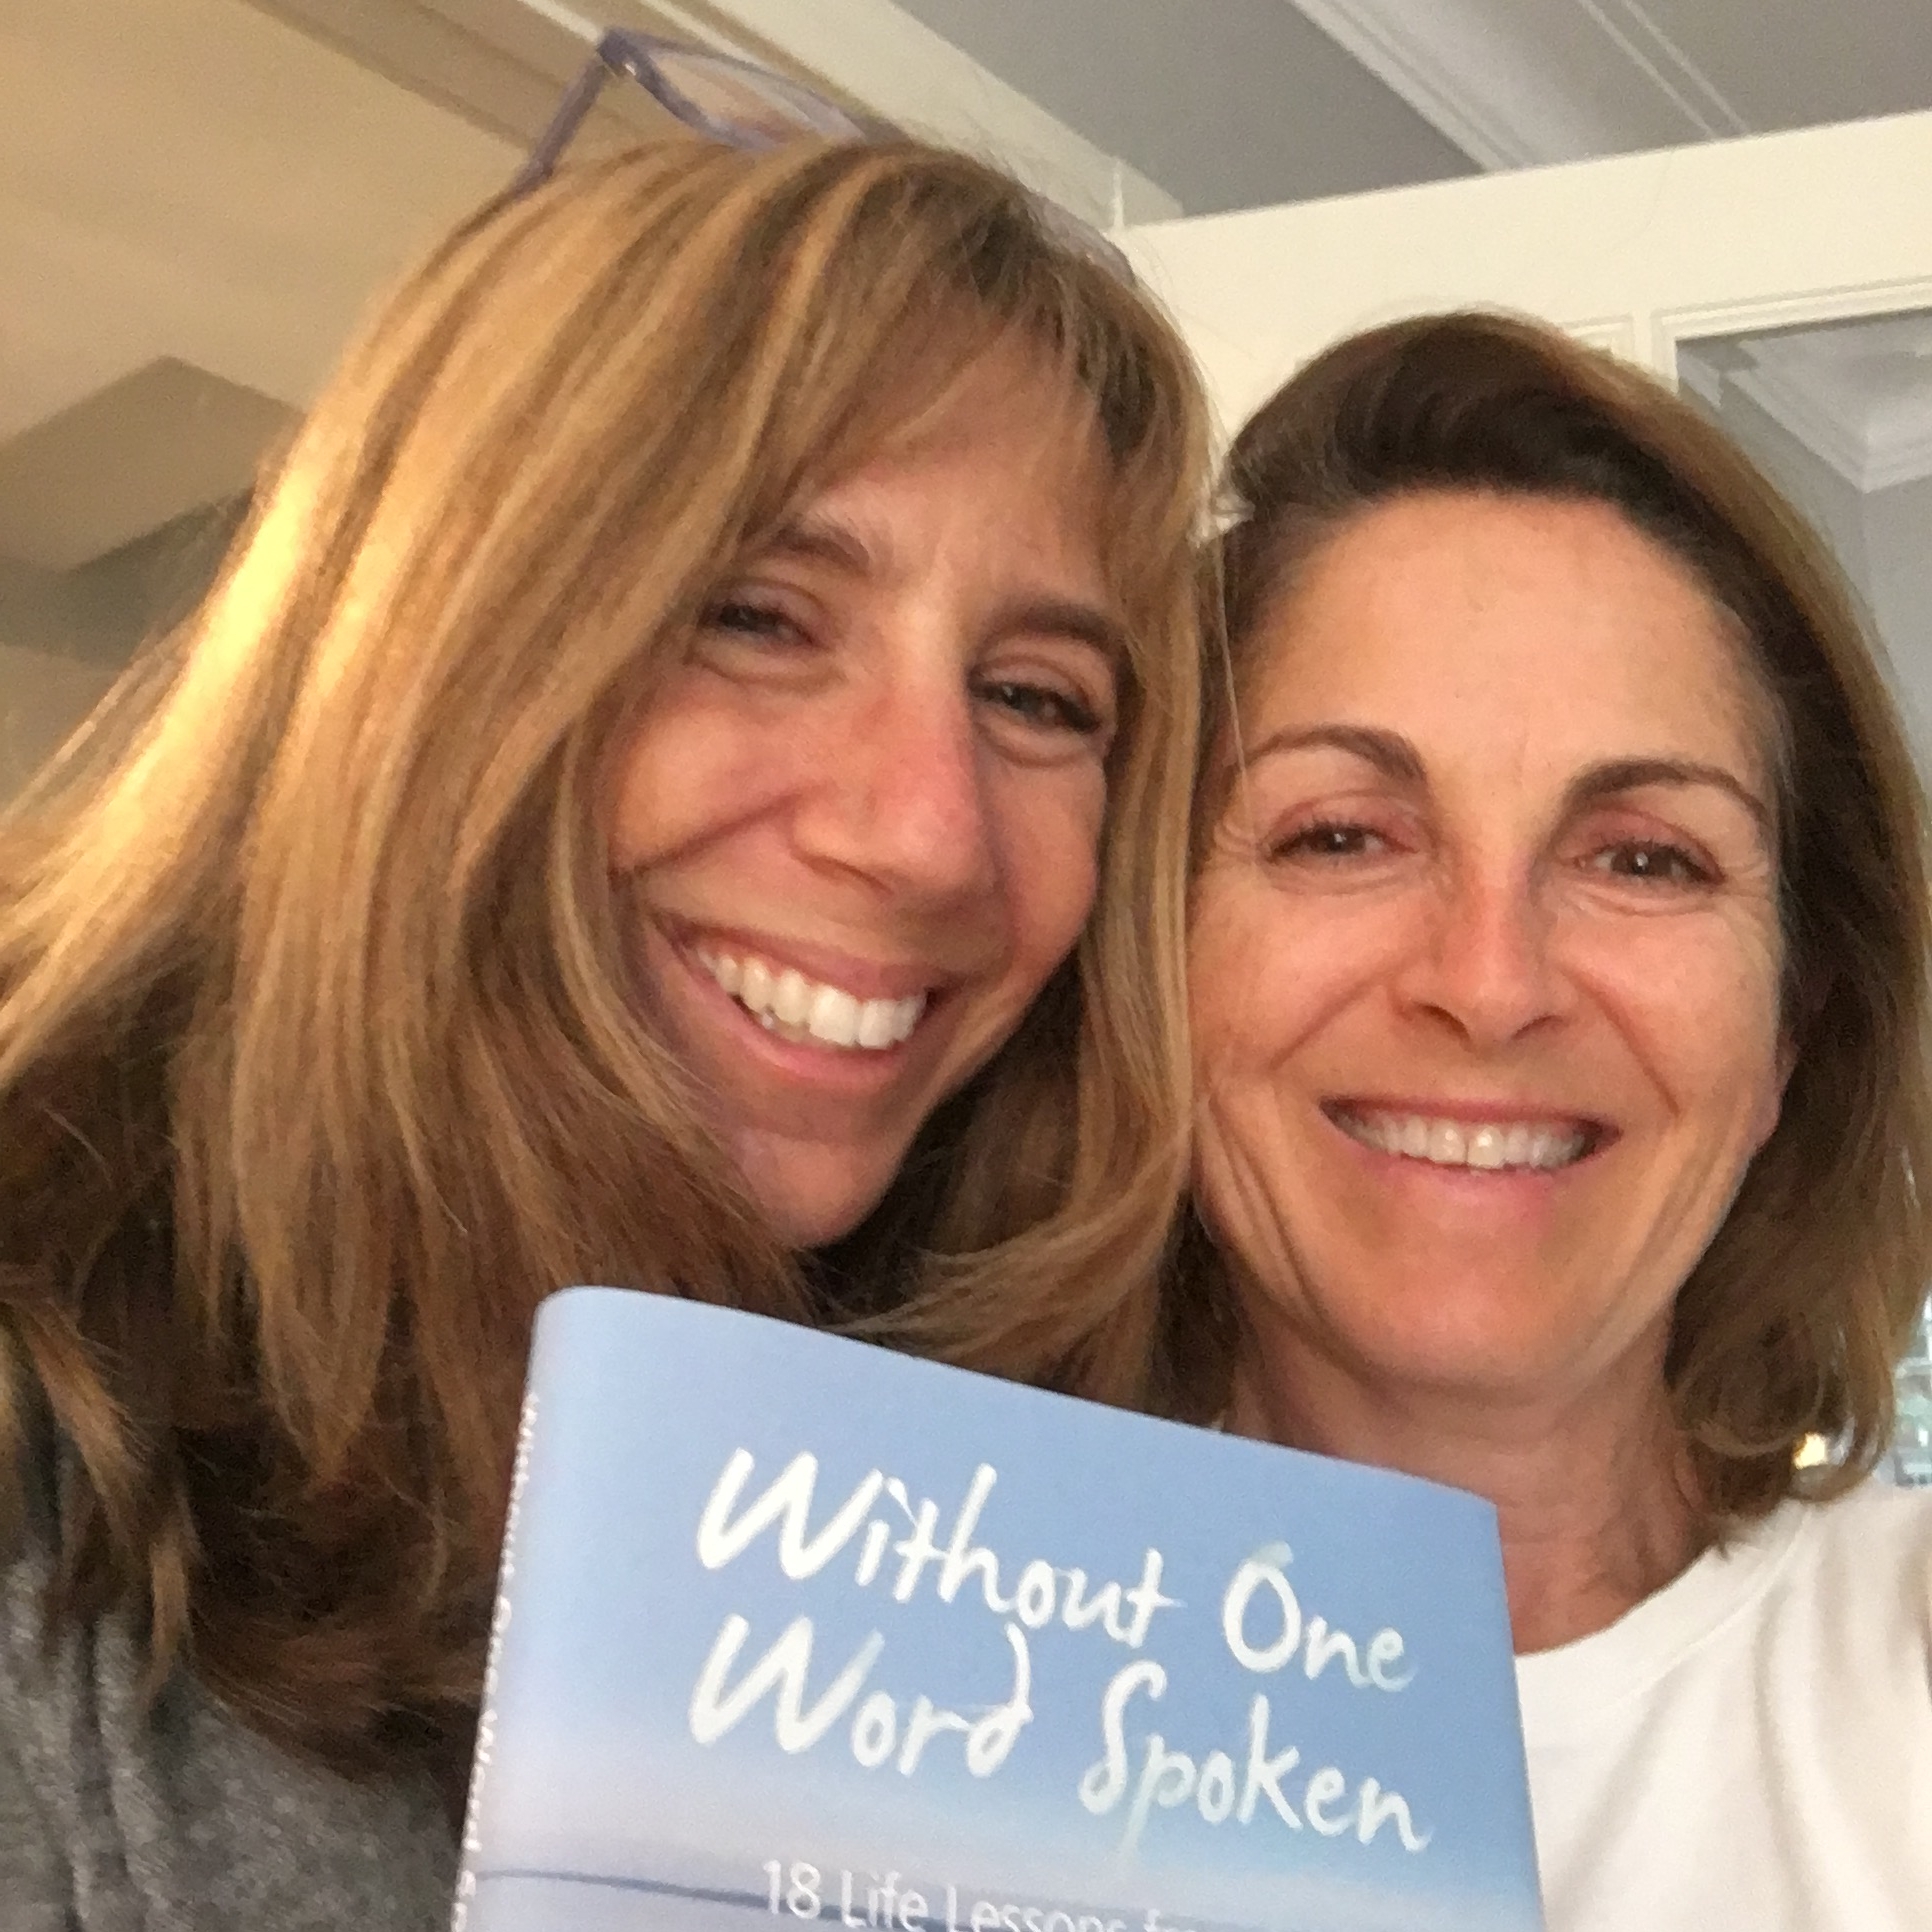 ellen schwartz and michelle kosoy with book 'without one word spoken'